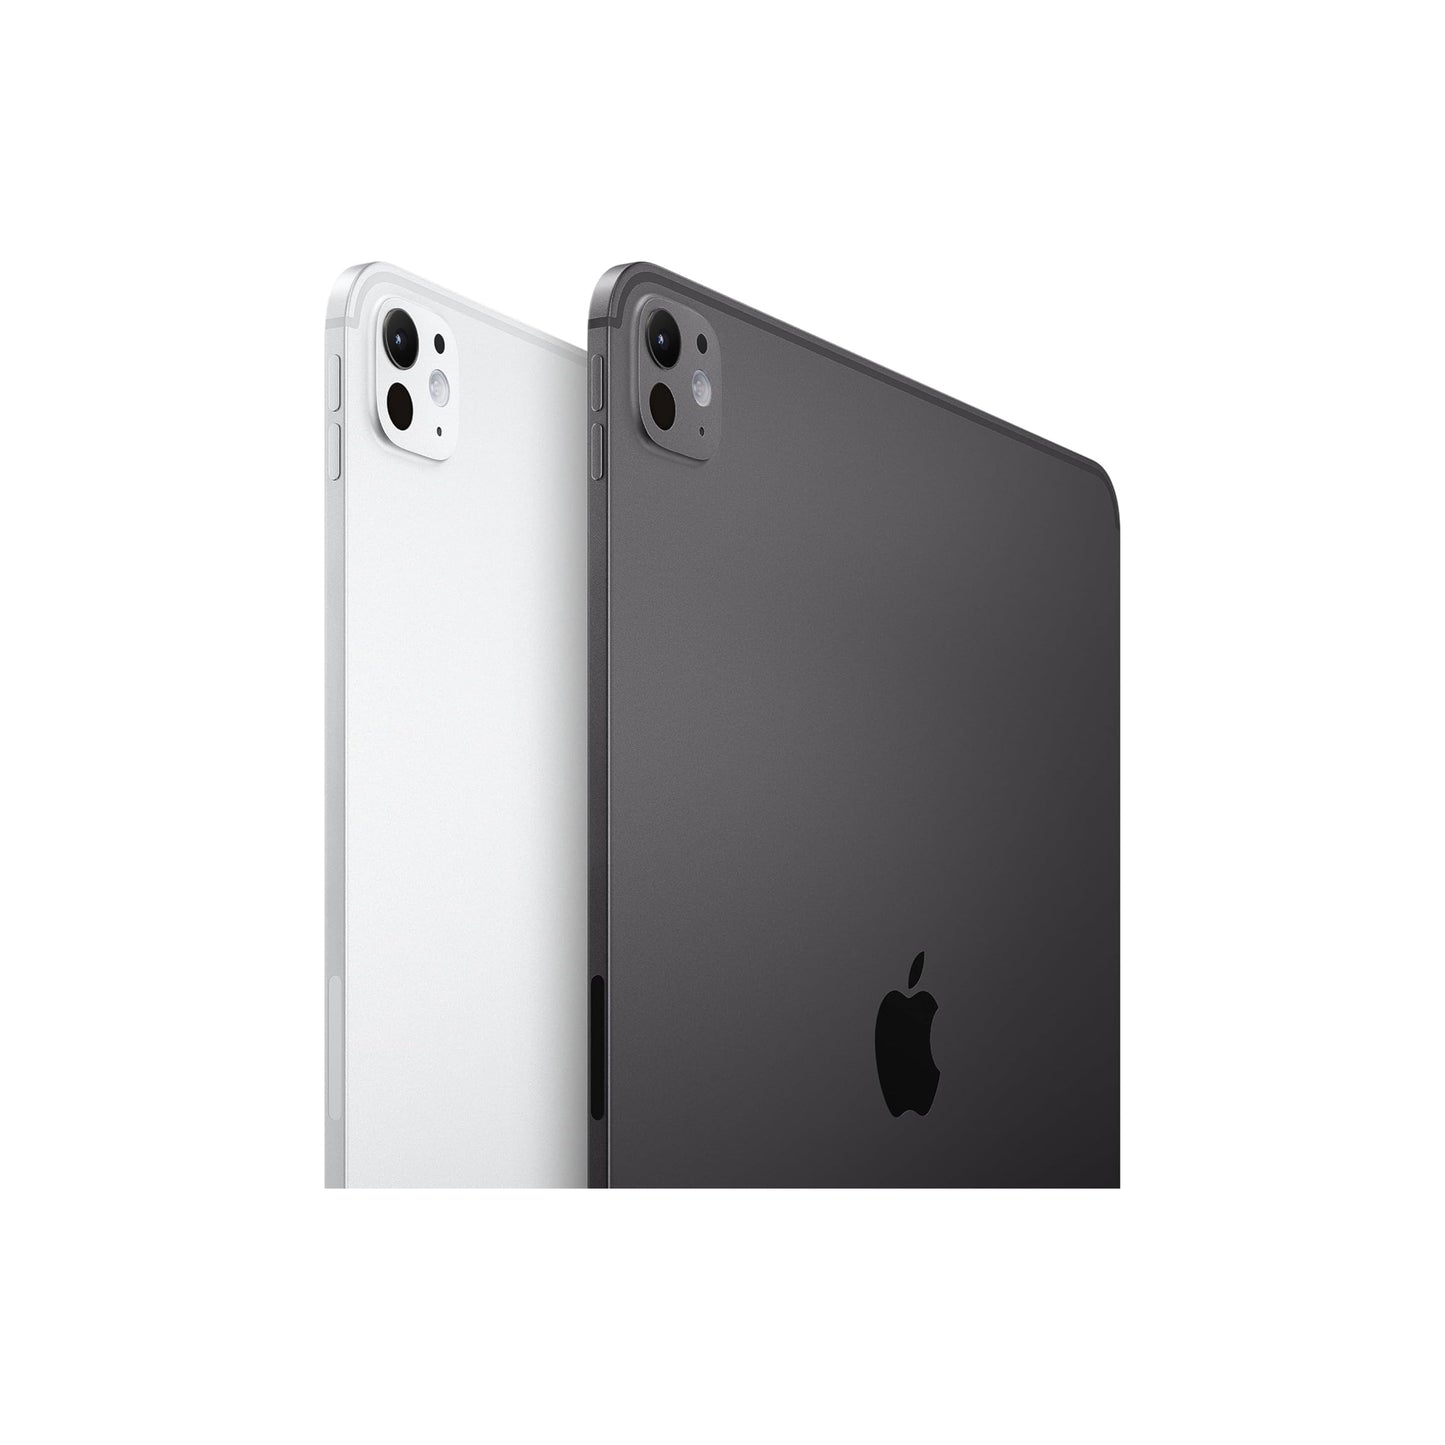 Apple iPad Pro 11 بوصة (M4): شاشة Ultra Retina XDR - زجاج نانو، 2 تيرابايت، كاميرا أمامية 12 ميجابكسل / كاميرا خلفية 12 ميجابكسل، ماسح ضوئي LiDAR، Wi-Fi 6E + 5G خلوي مع eSIM، معرف الوجه - أسود فلكي